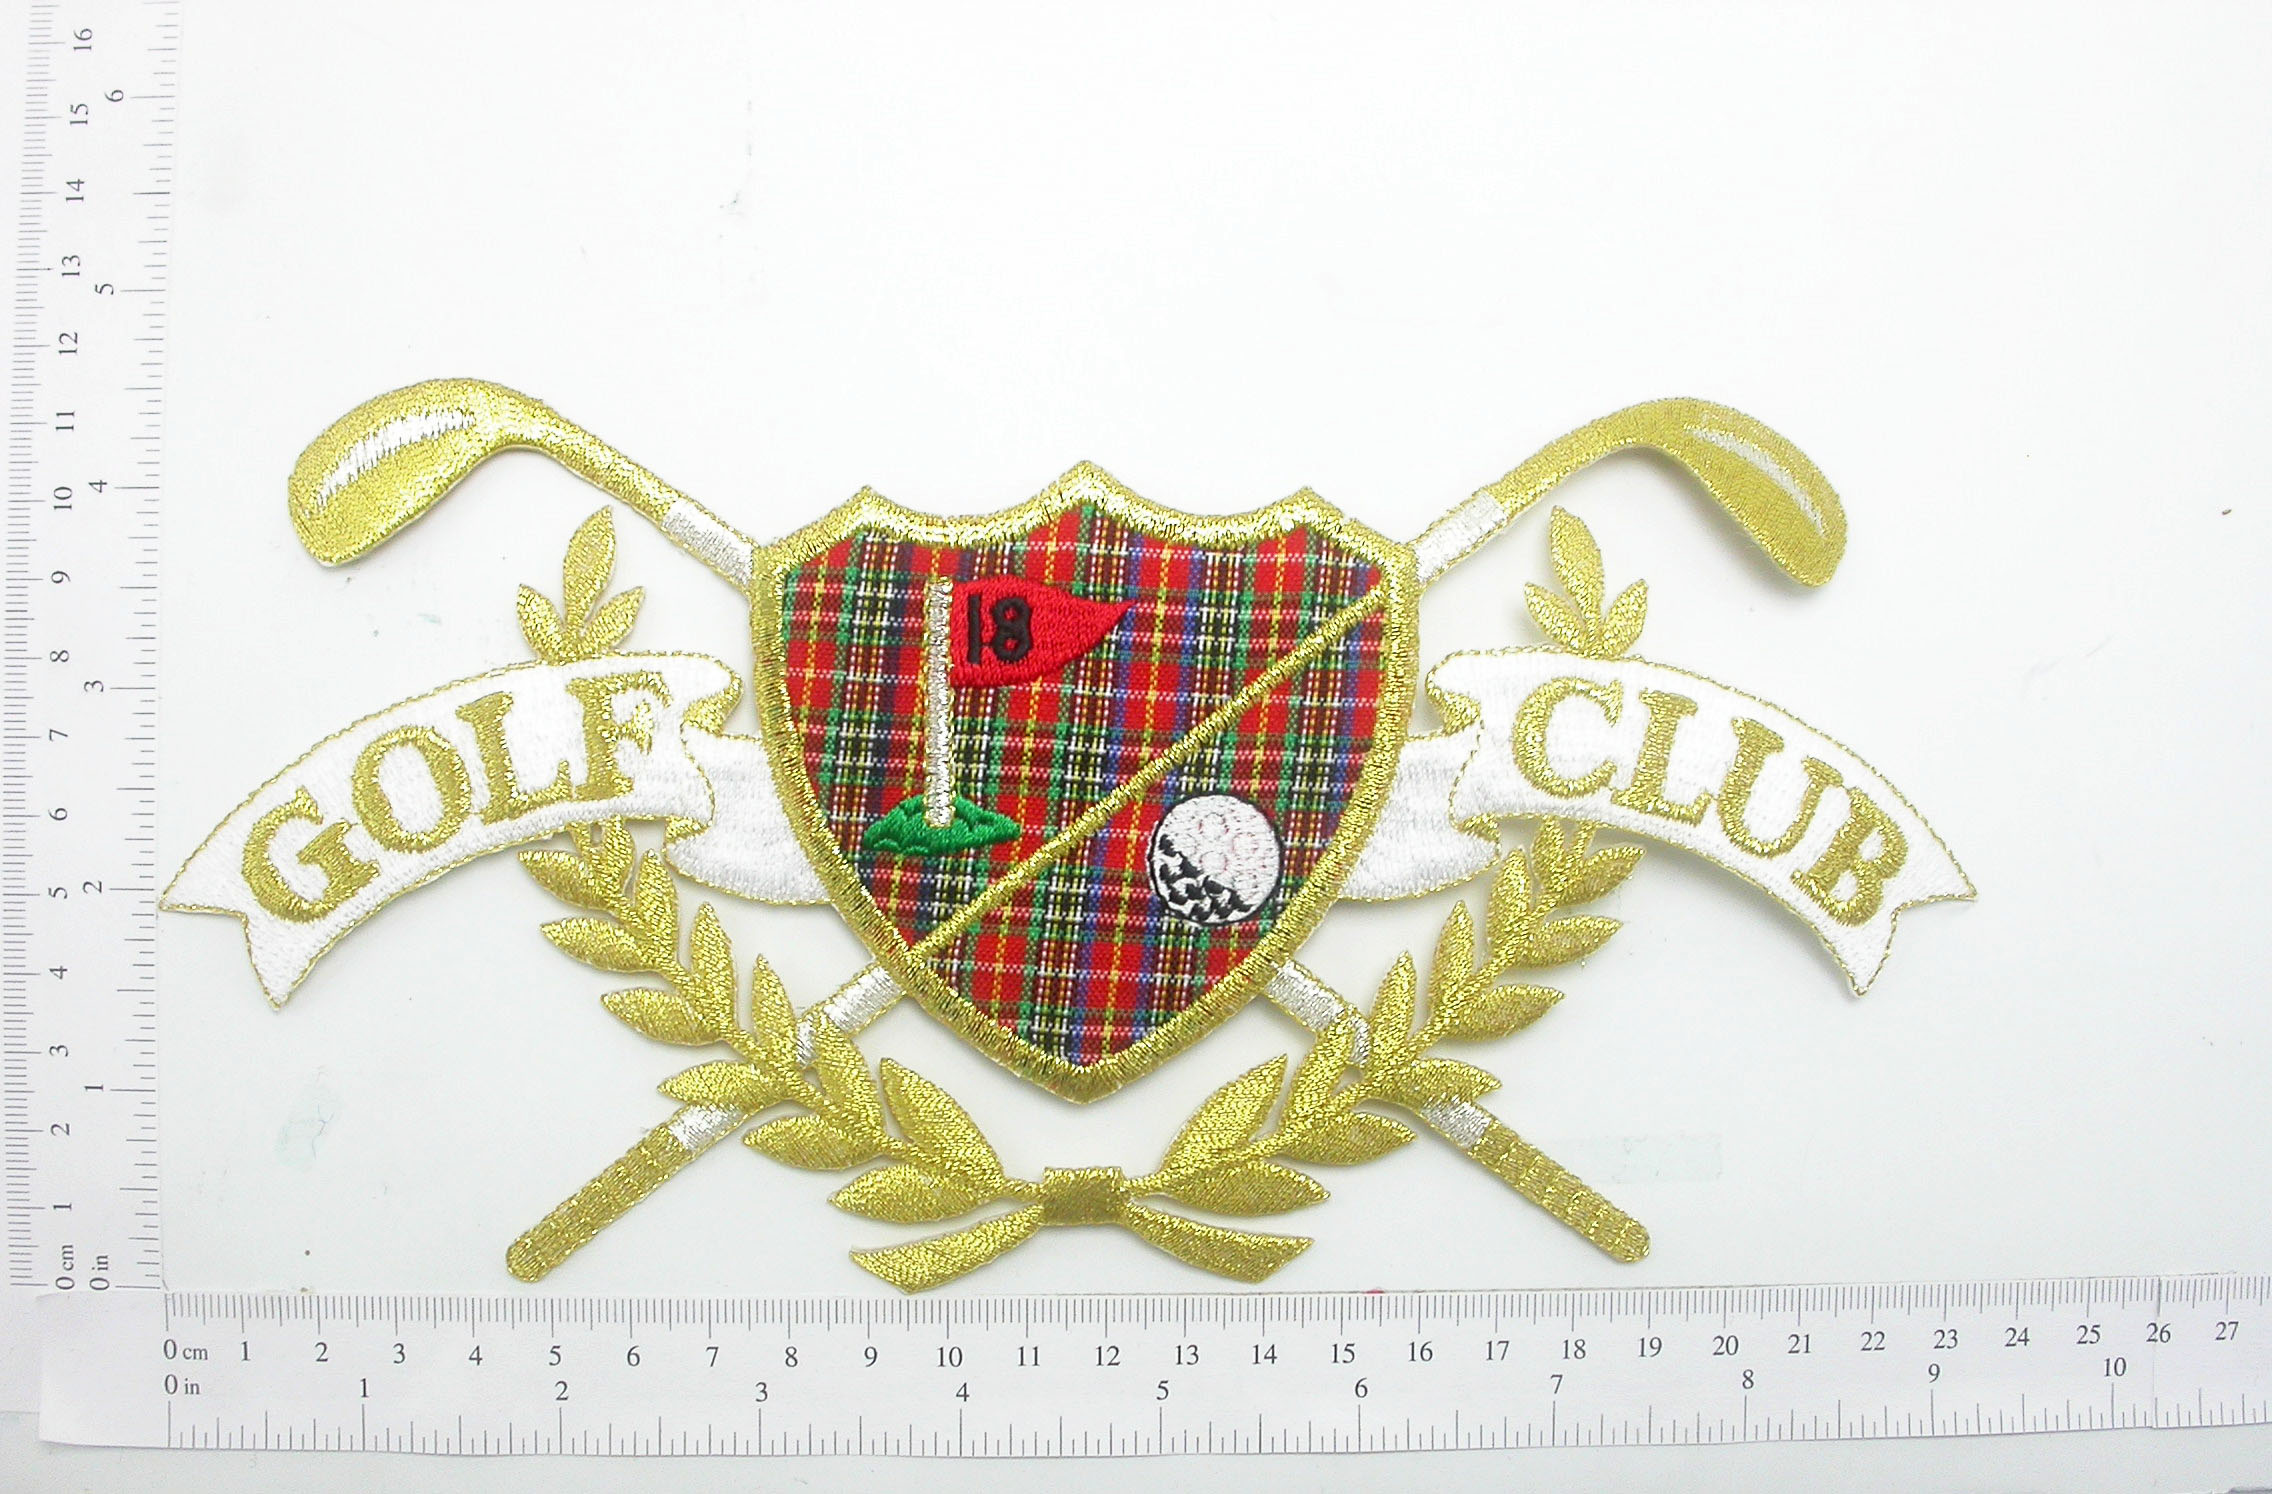 crest golf course logo